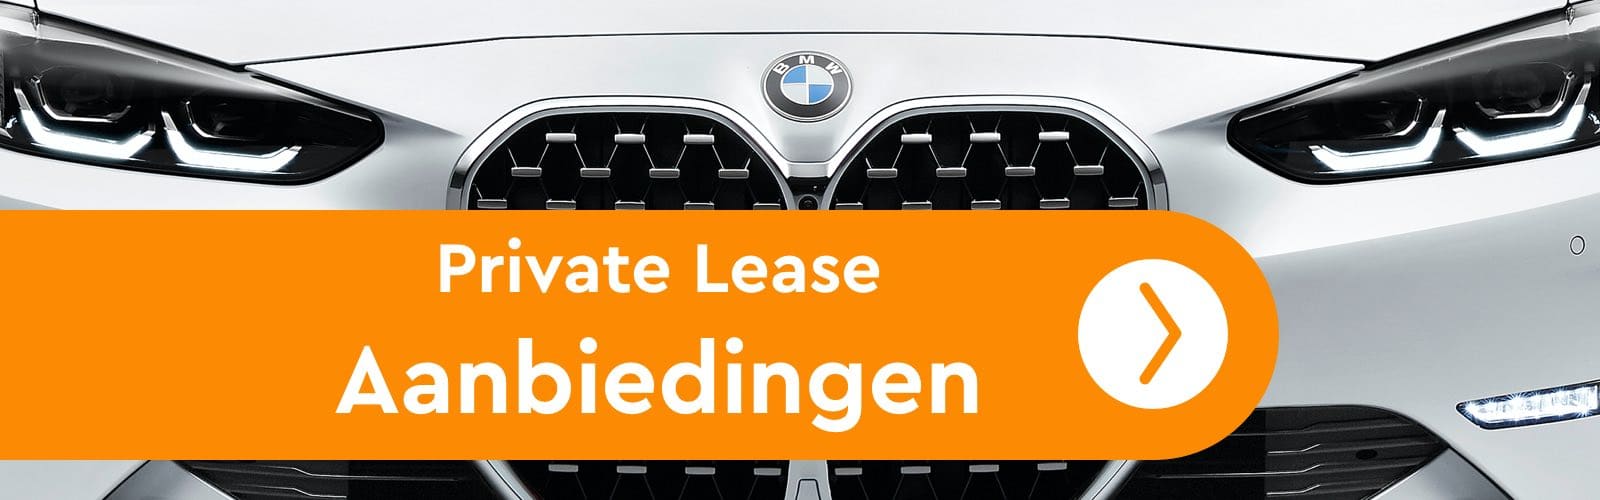 Private Lease Aanbiedingen BMW